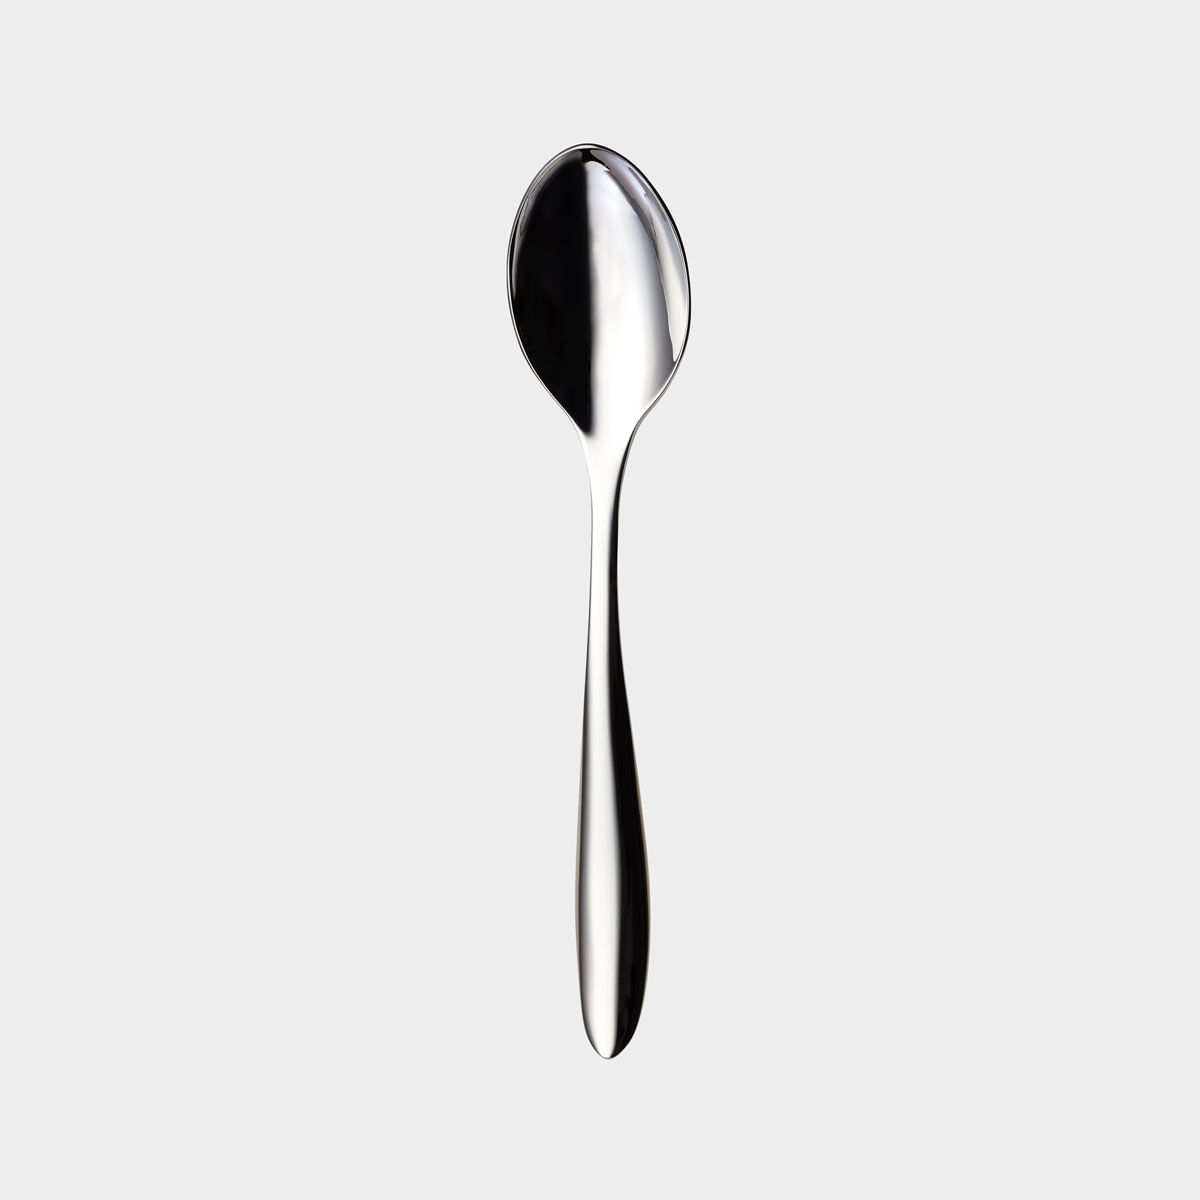 Lykke dinner spoon product image